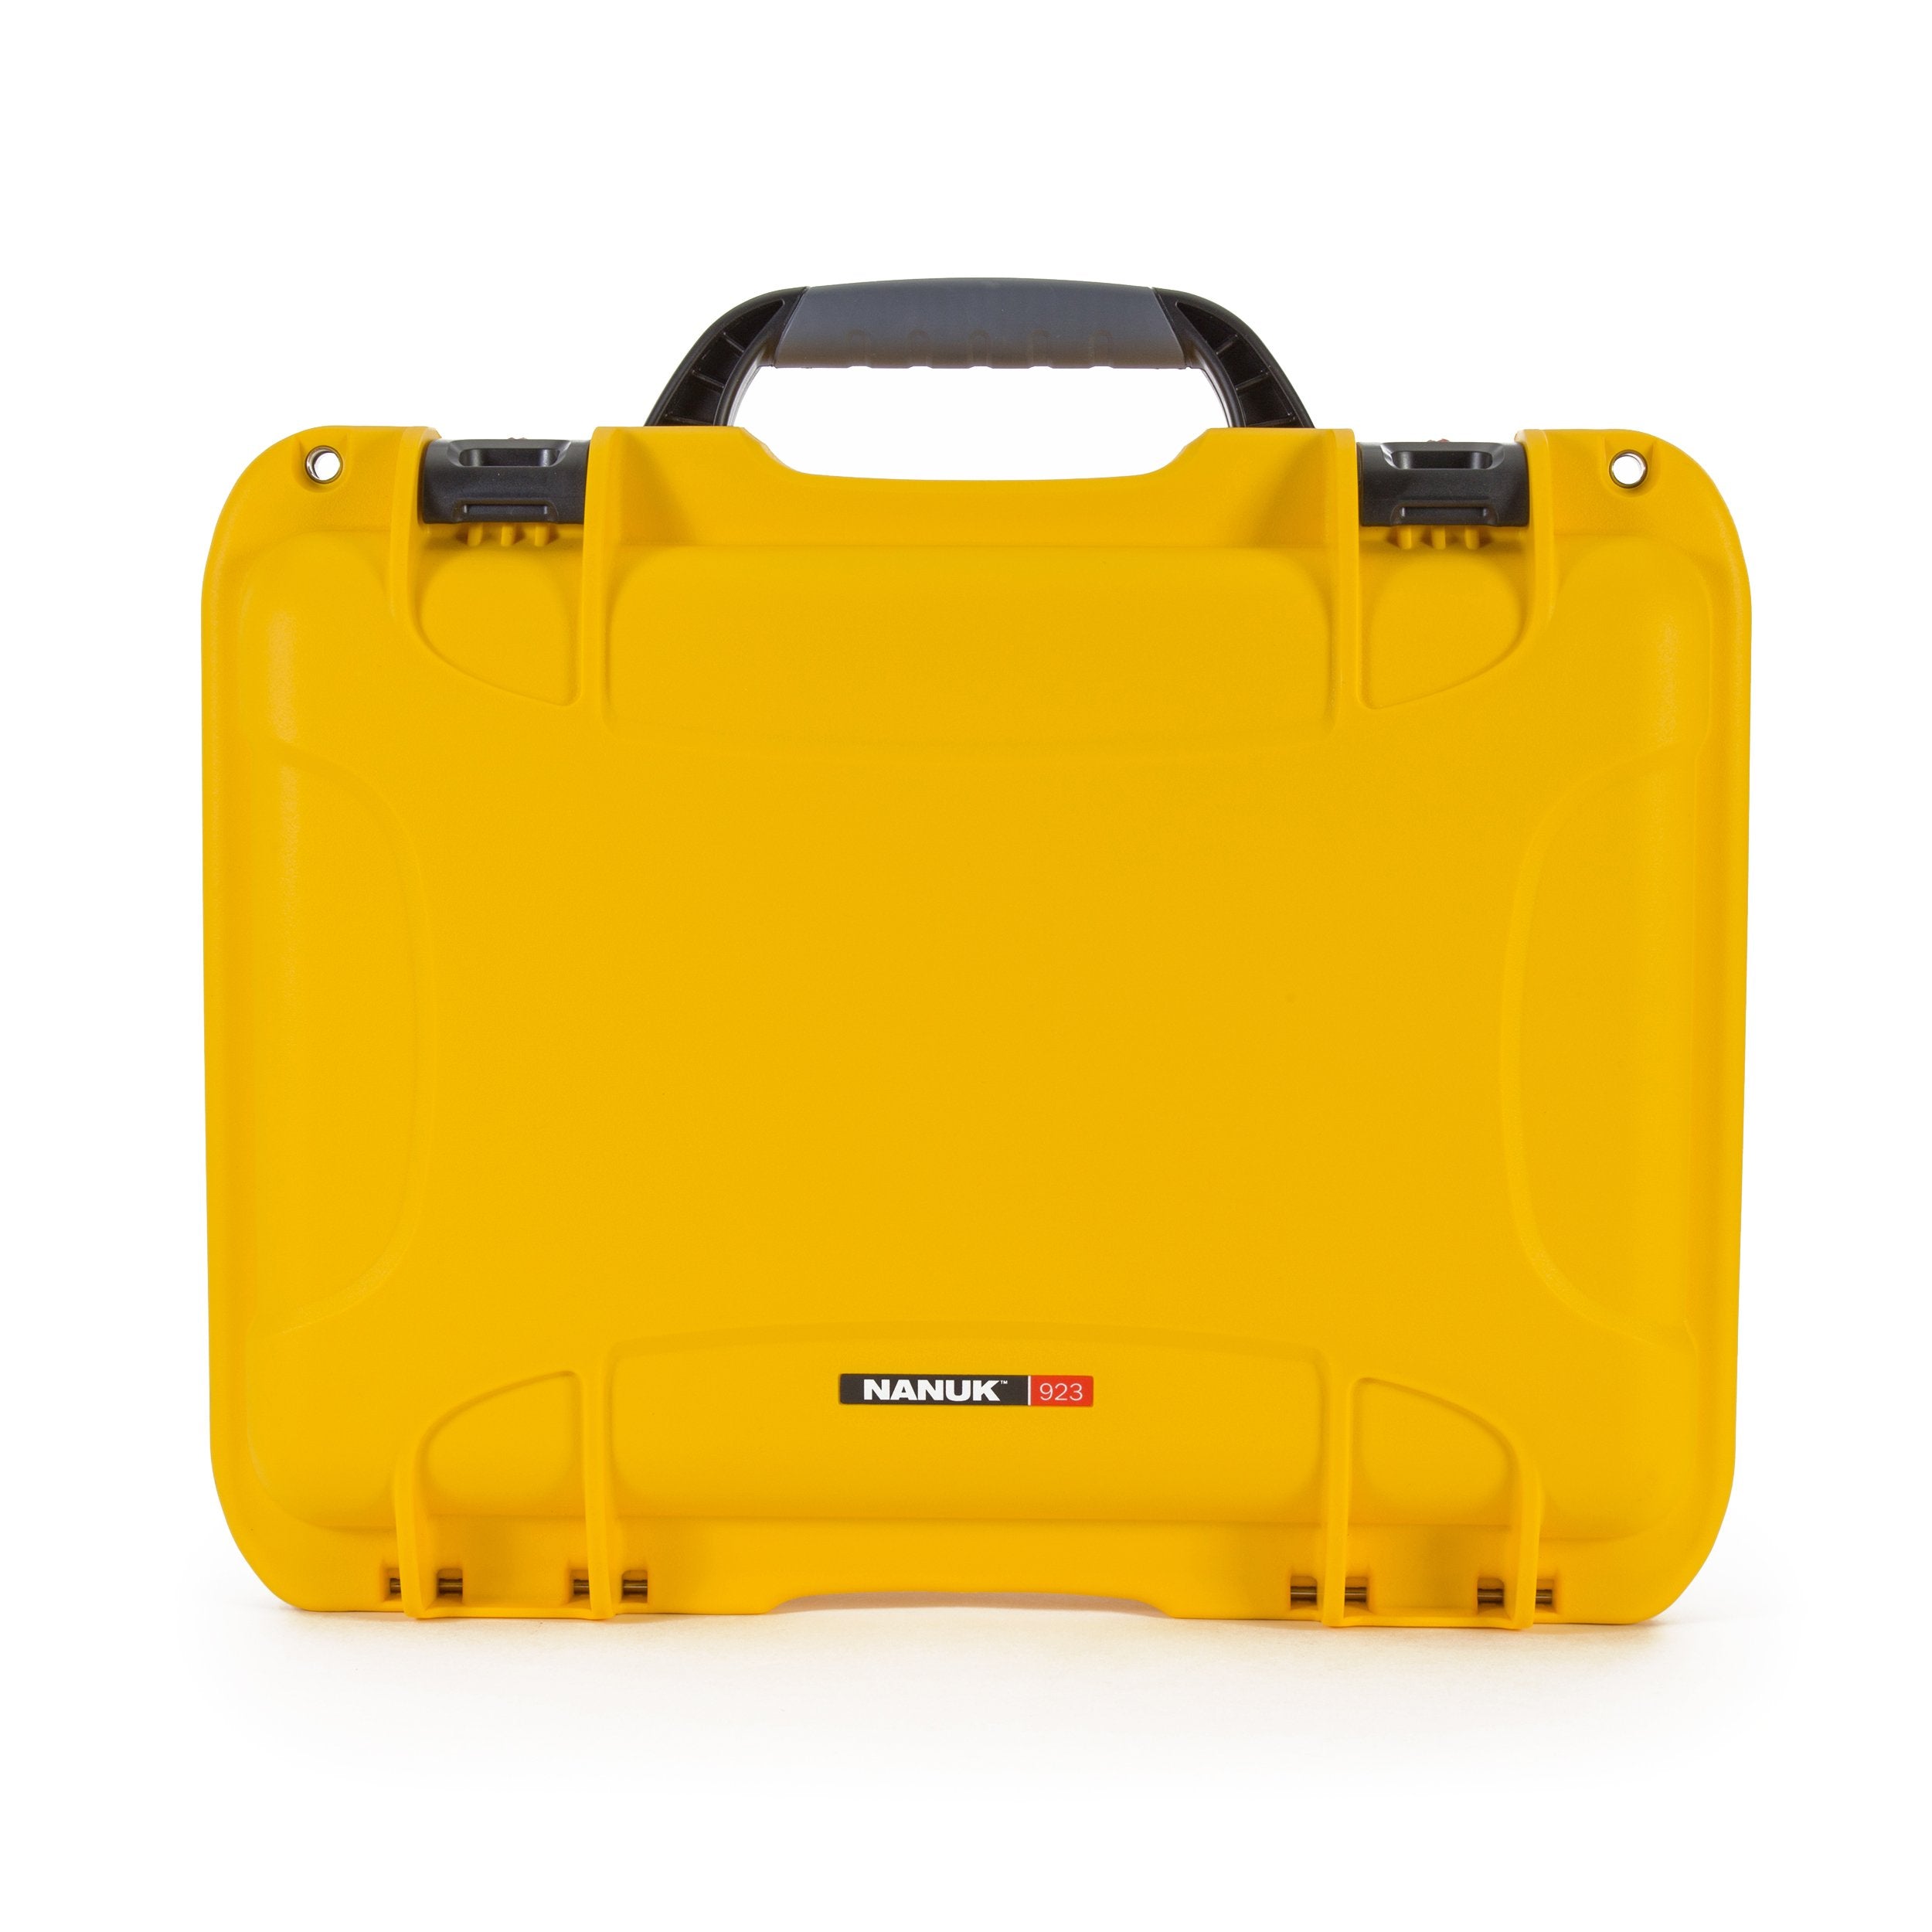 Nanuk 923 Waterproof Hard Case - Yellow